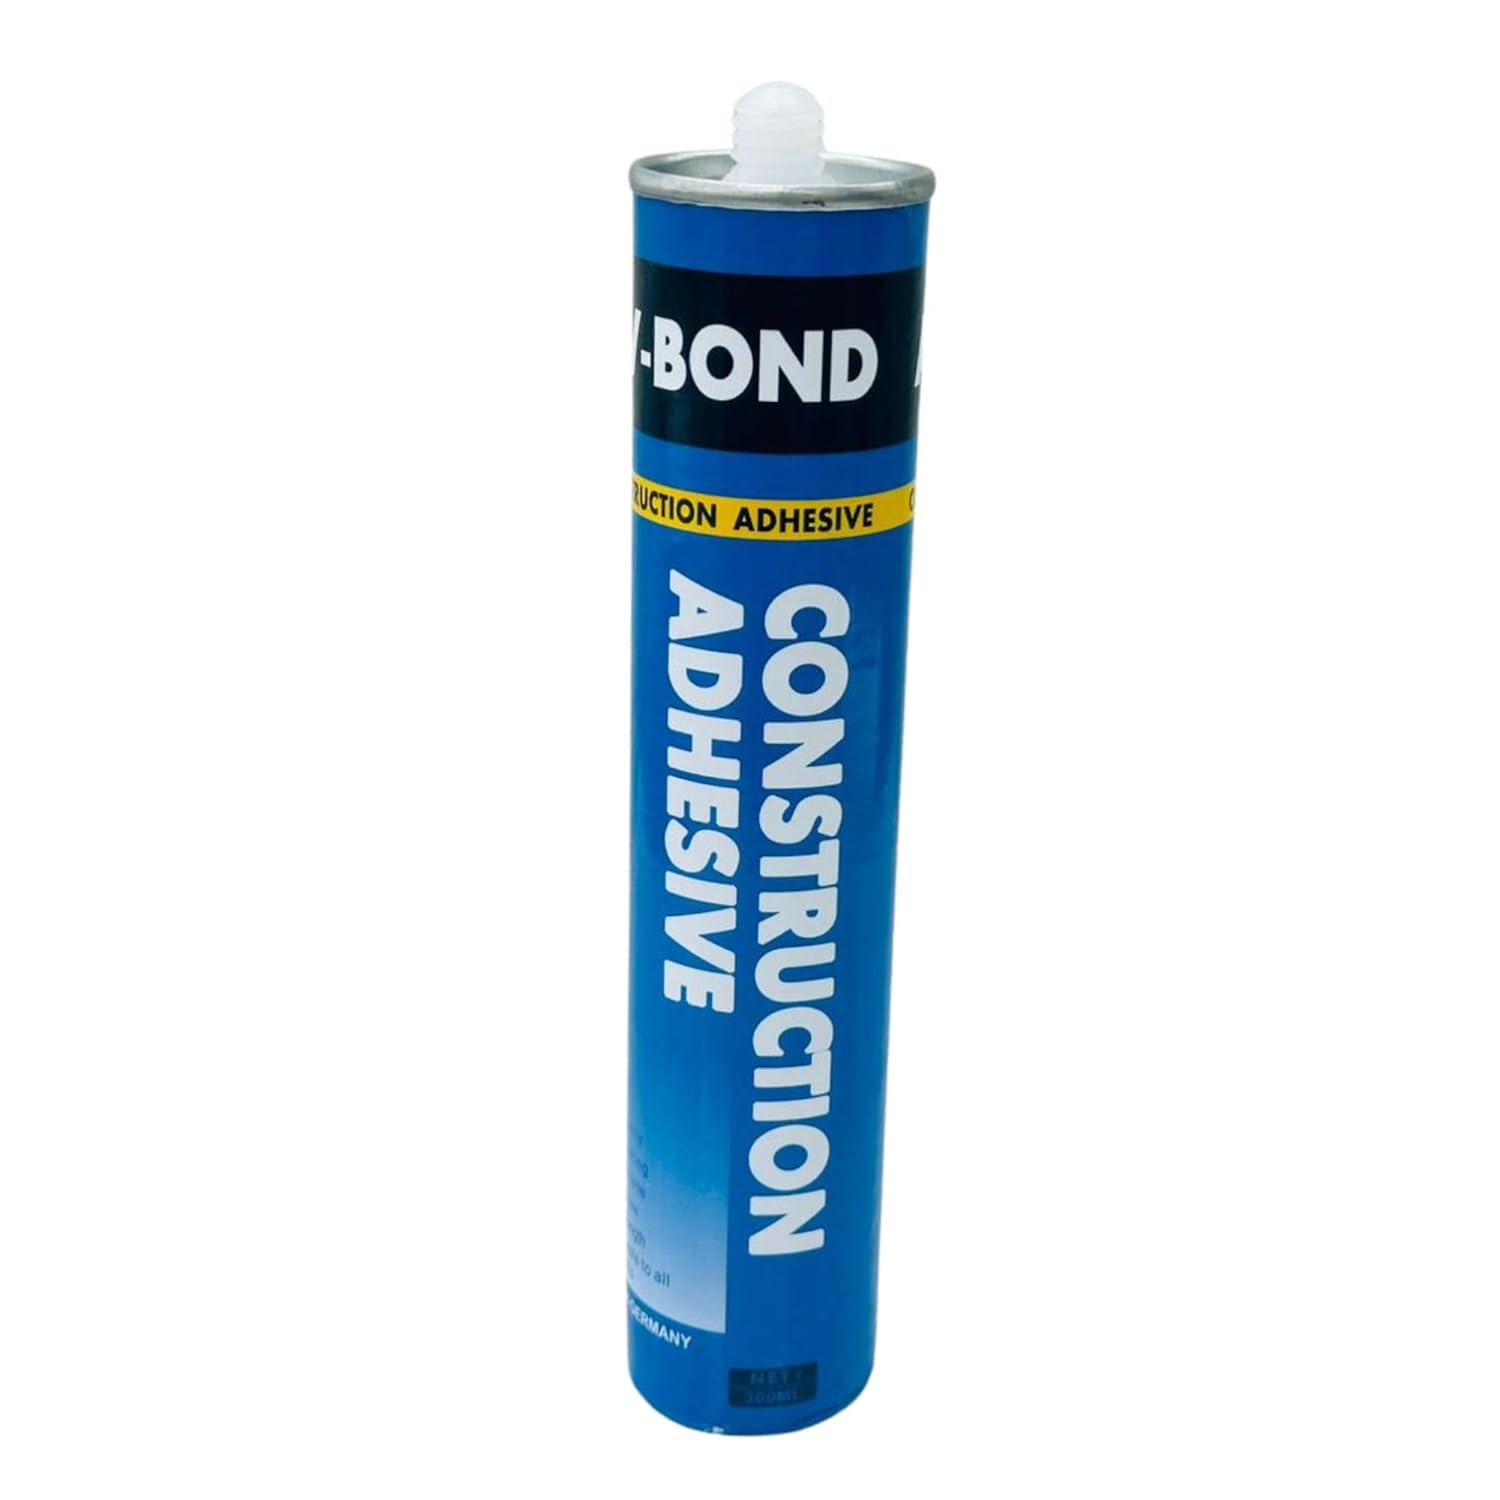 GENERIC AV Bond Glue Construction – High-Strength Quick-Drying Adhesive